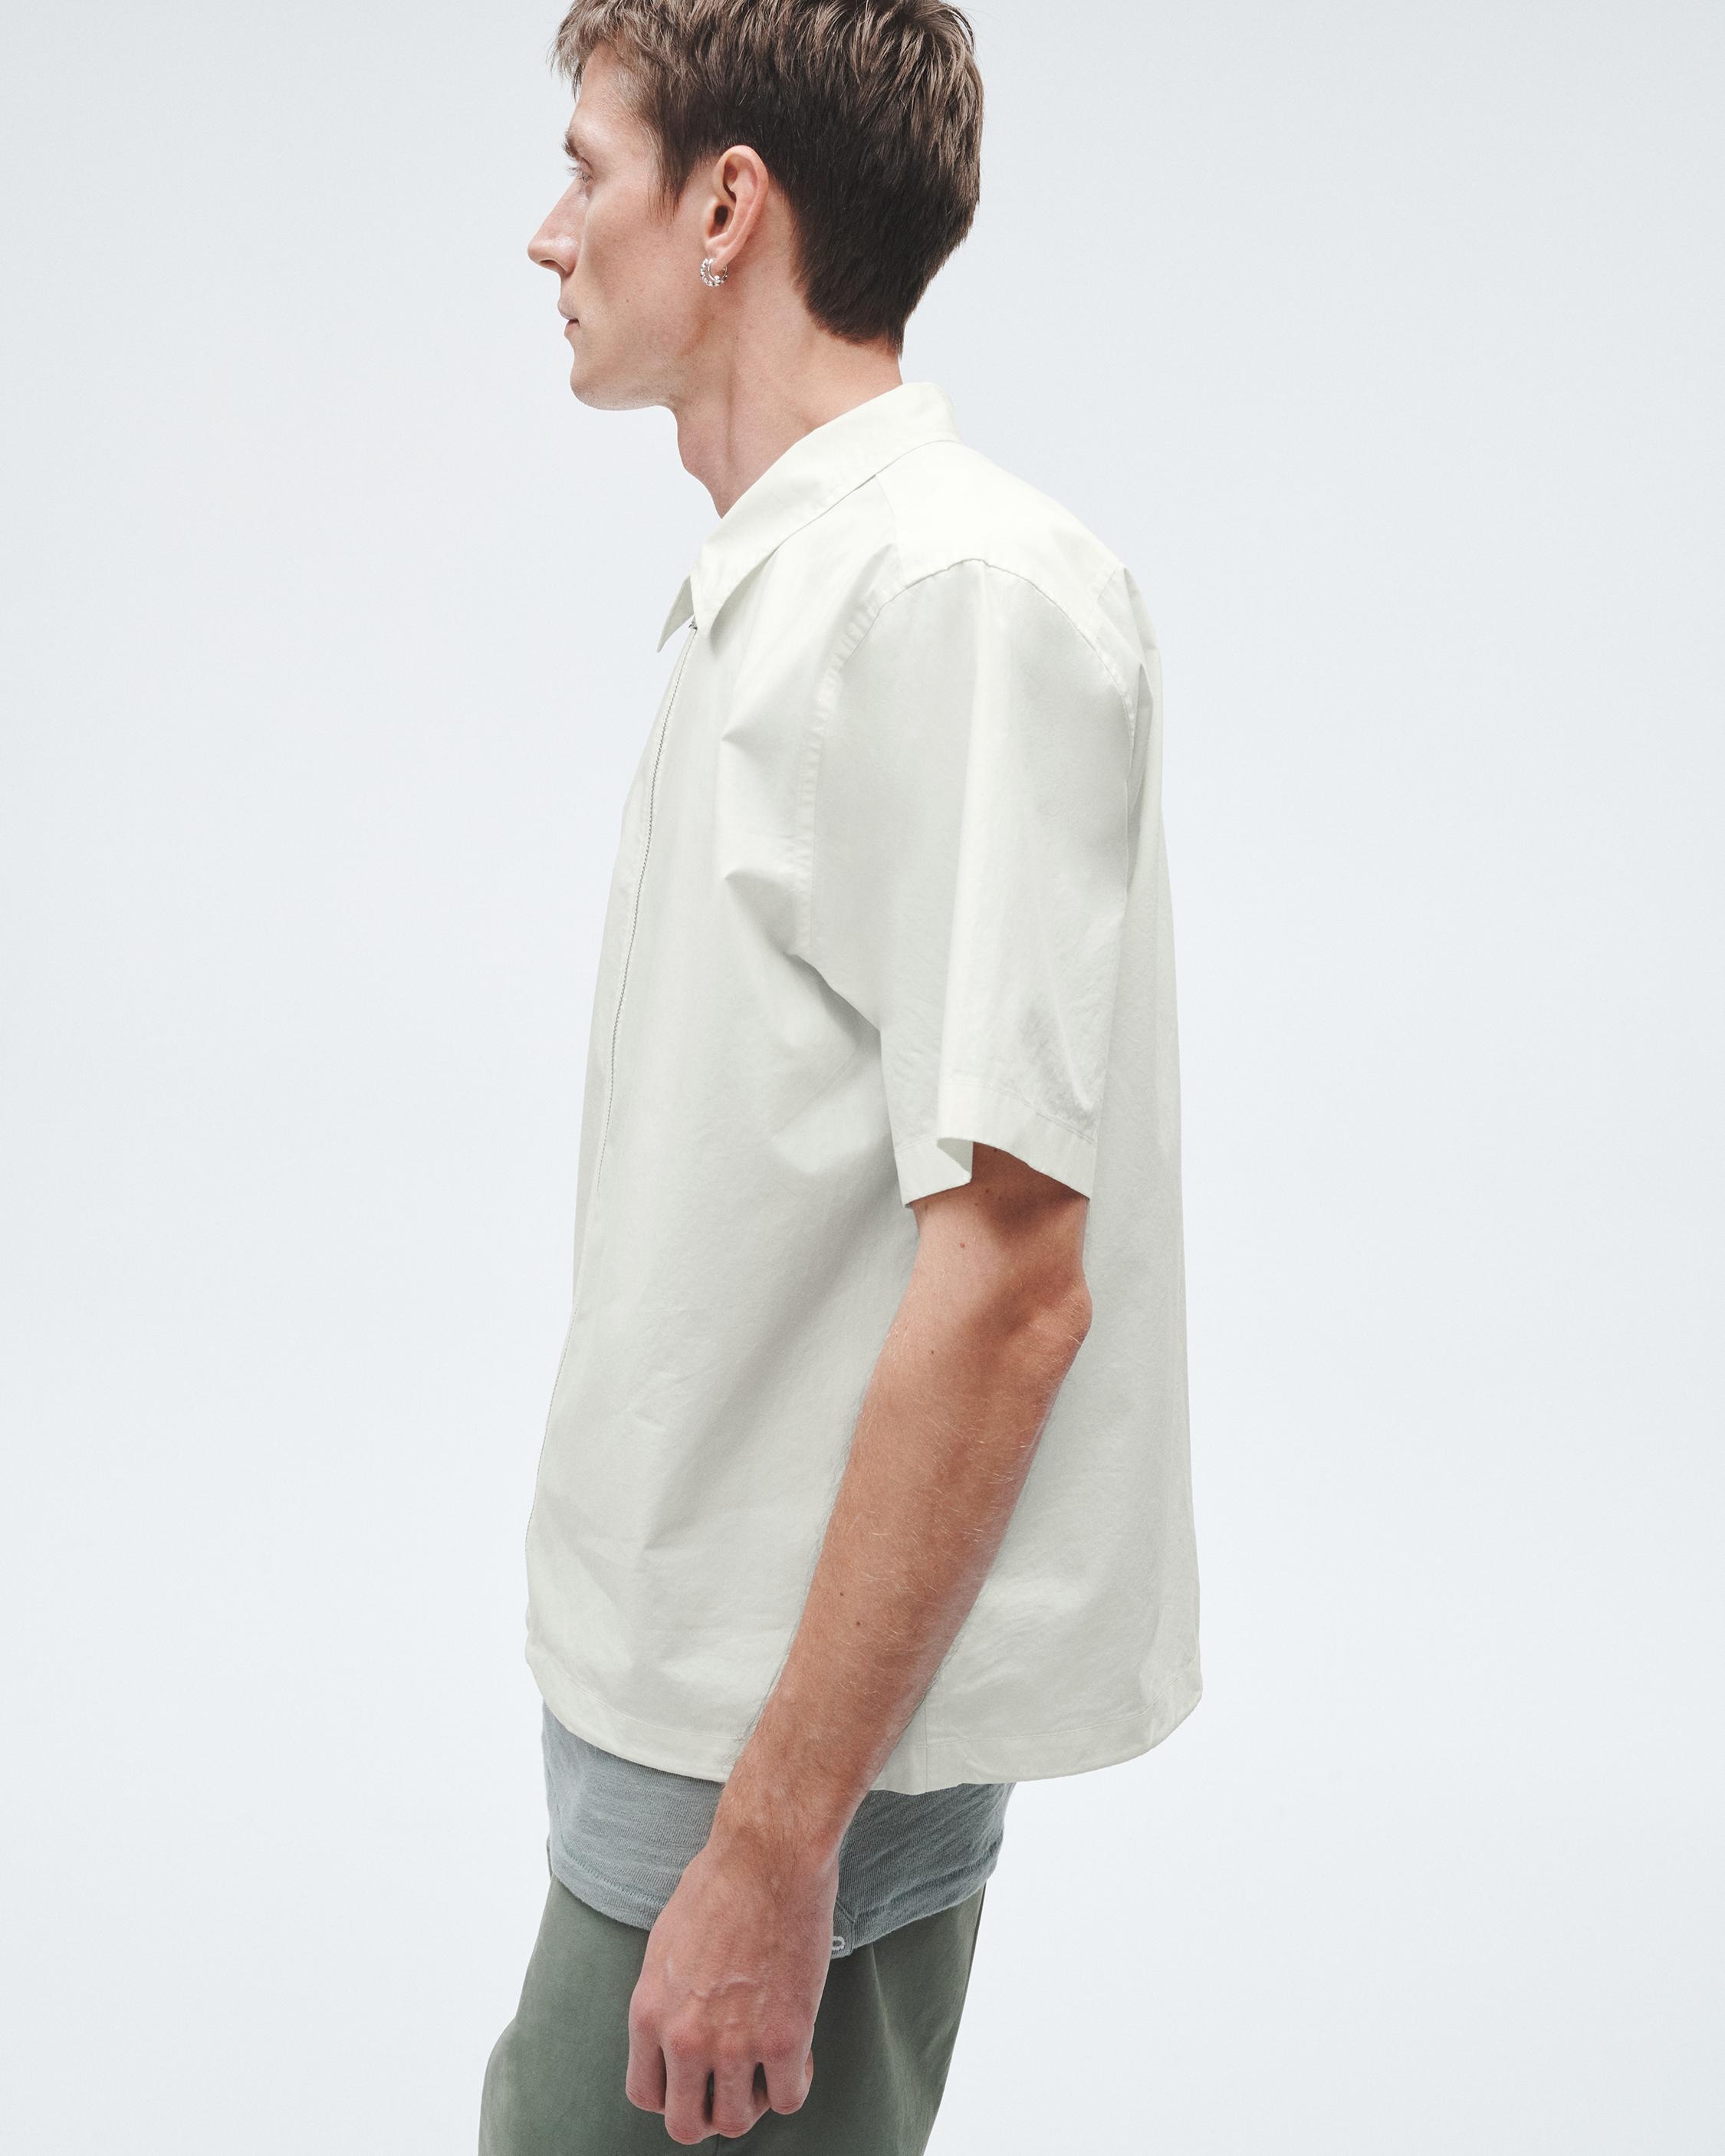 Noah Cotton Zip Shirt
Relaxed Fit Button Down - 3